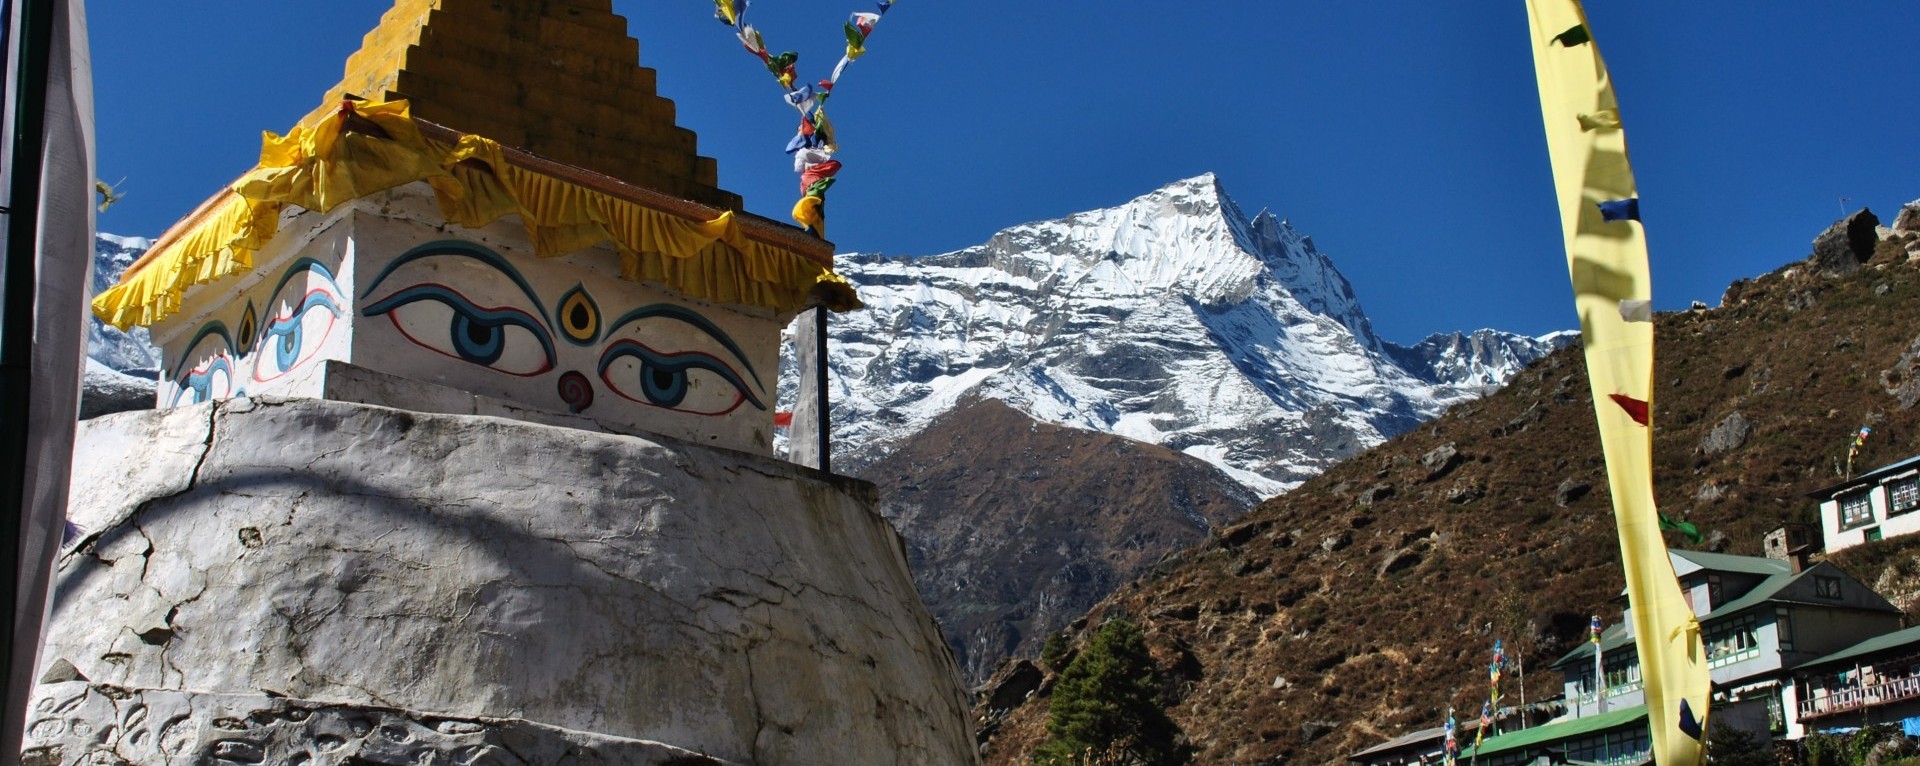 Khumbu trekking, khumbu valley trekking, monastry in everest